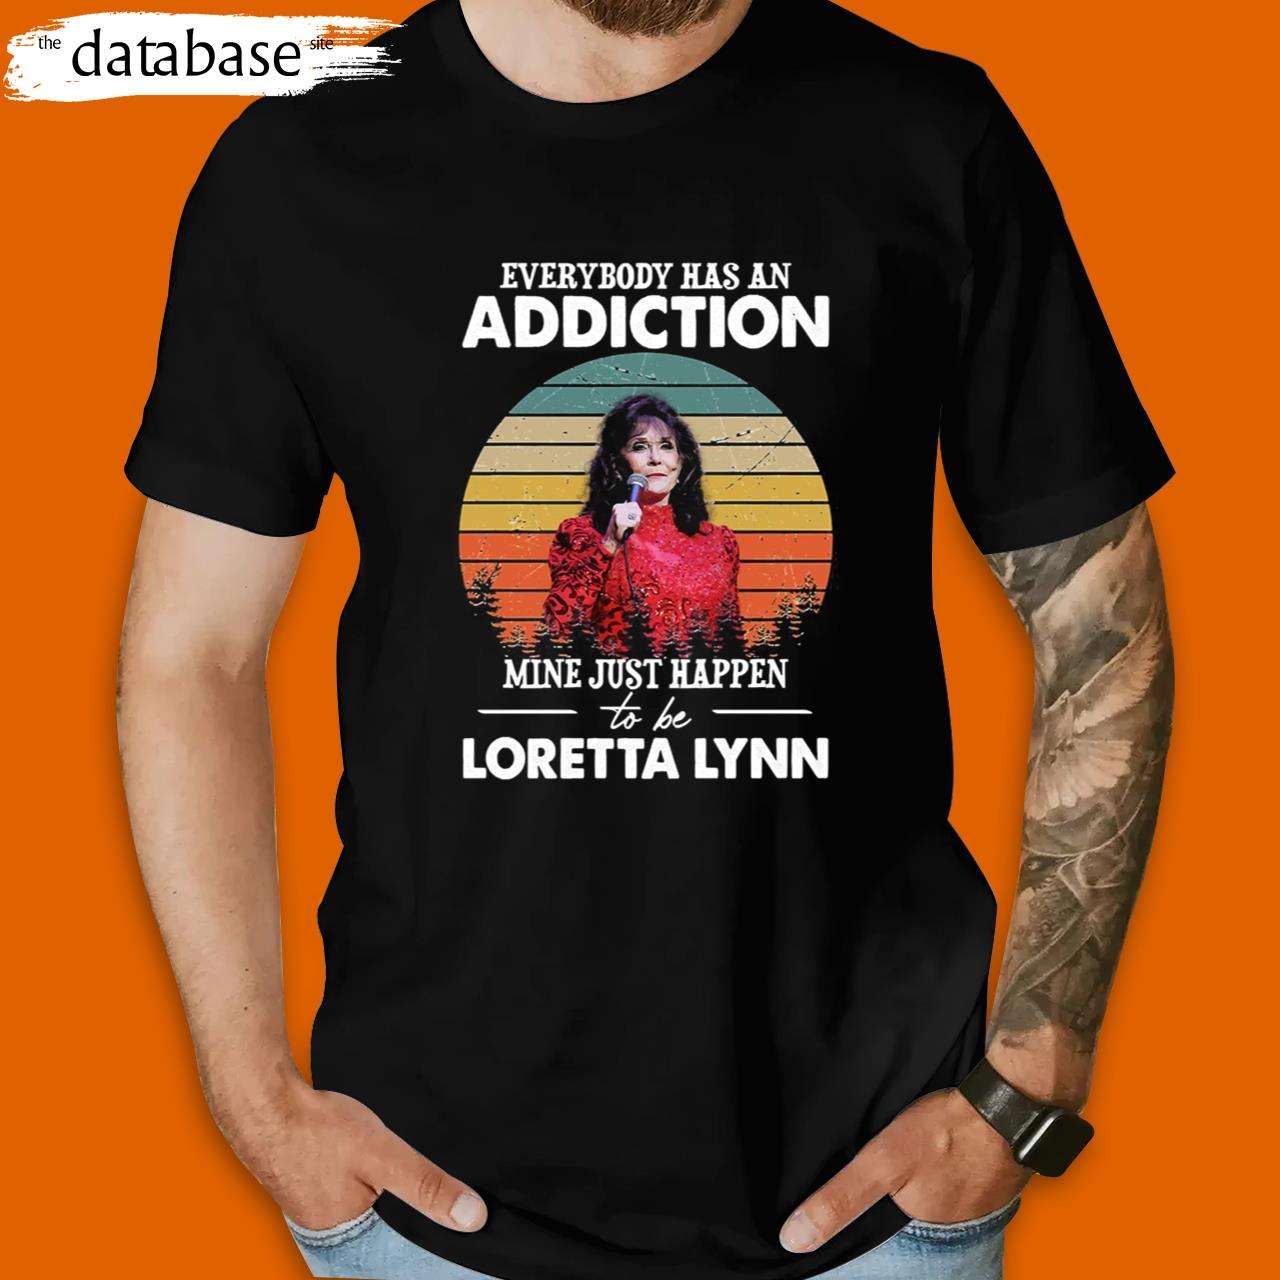 Vintage Loretta Lynn T-Shirt Singer Songwriter Career Spanning Six Decades